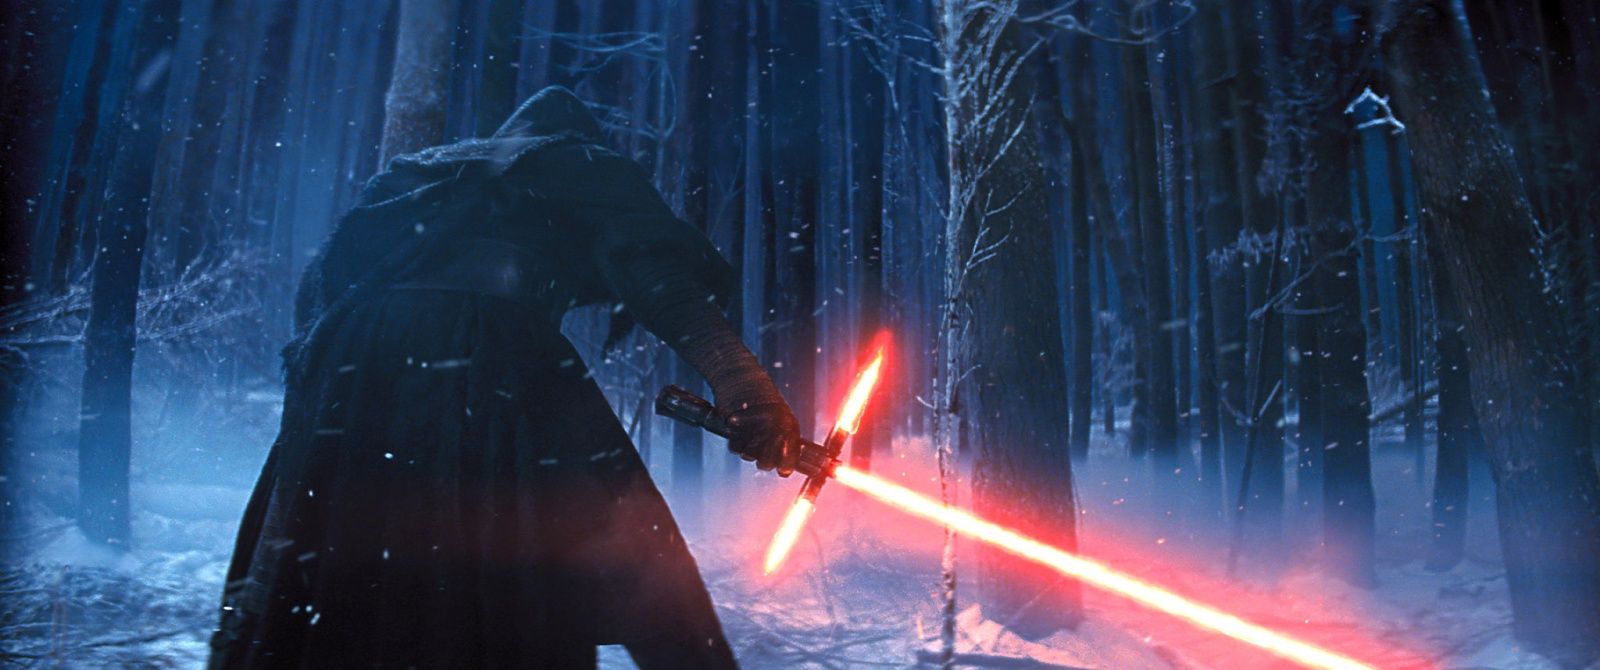 Kylo Ren's light saber before redesign